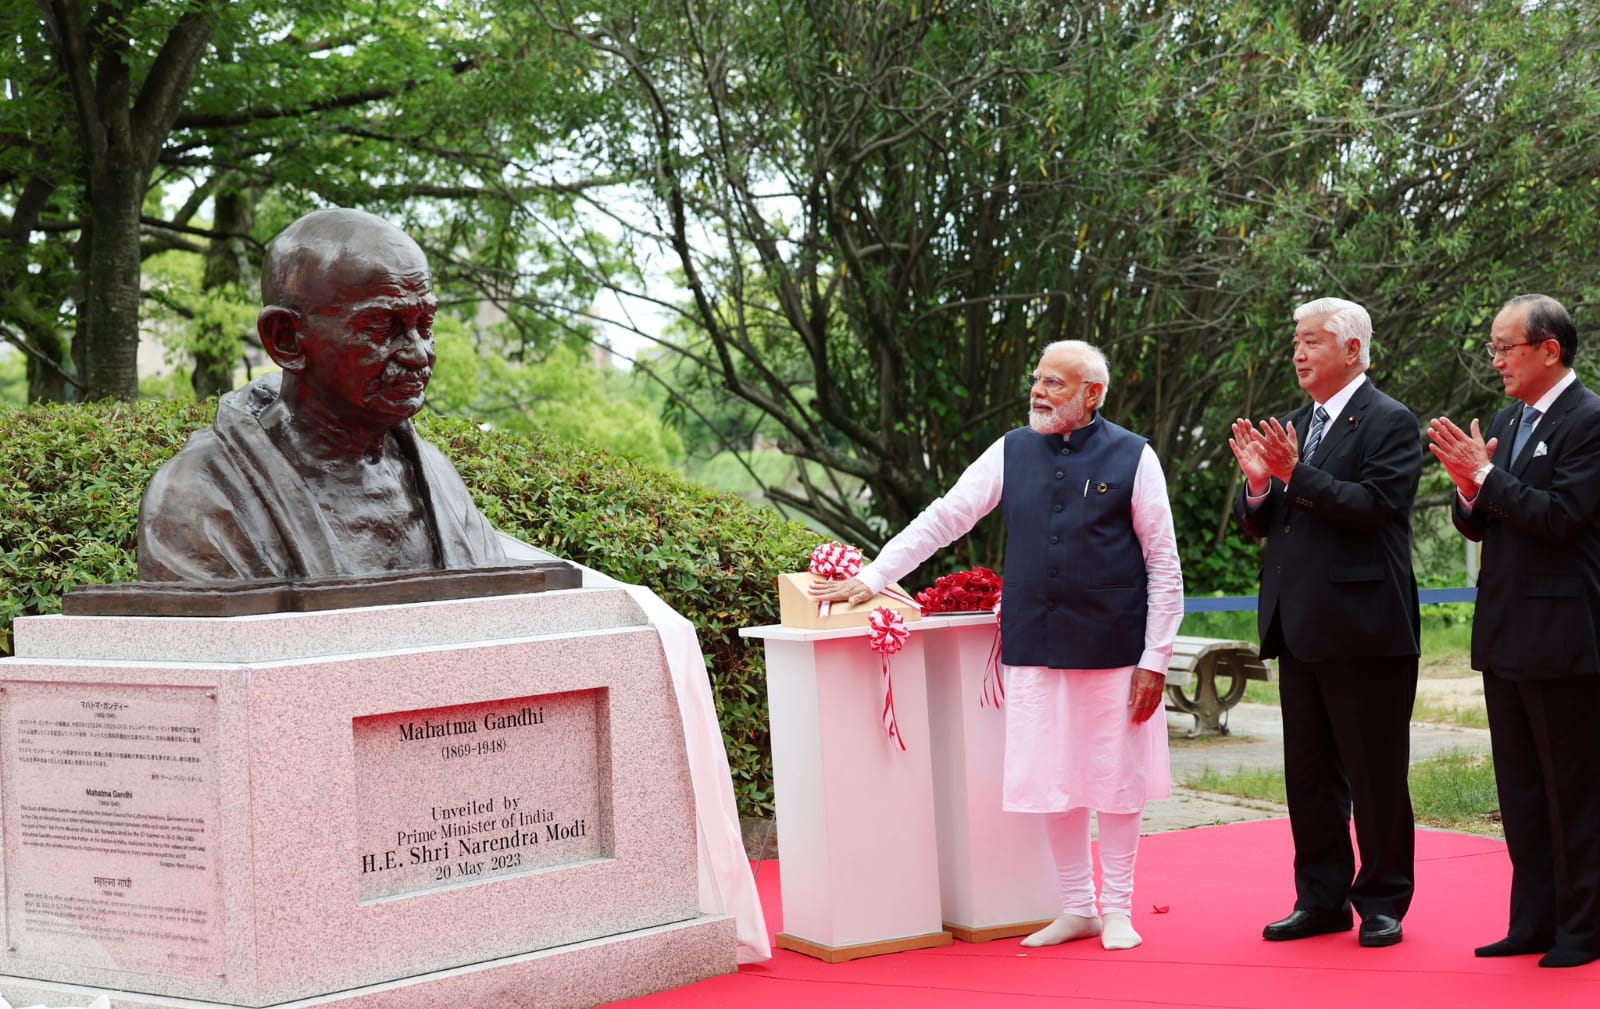 PM Modi Unveils Bust Of Mahatma Gandhi In Japan’s Hiroshima, Says It Will Take Forward Idea Of Non-Violence